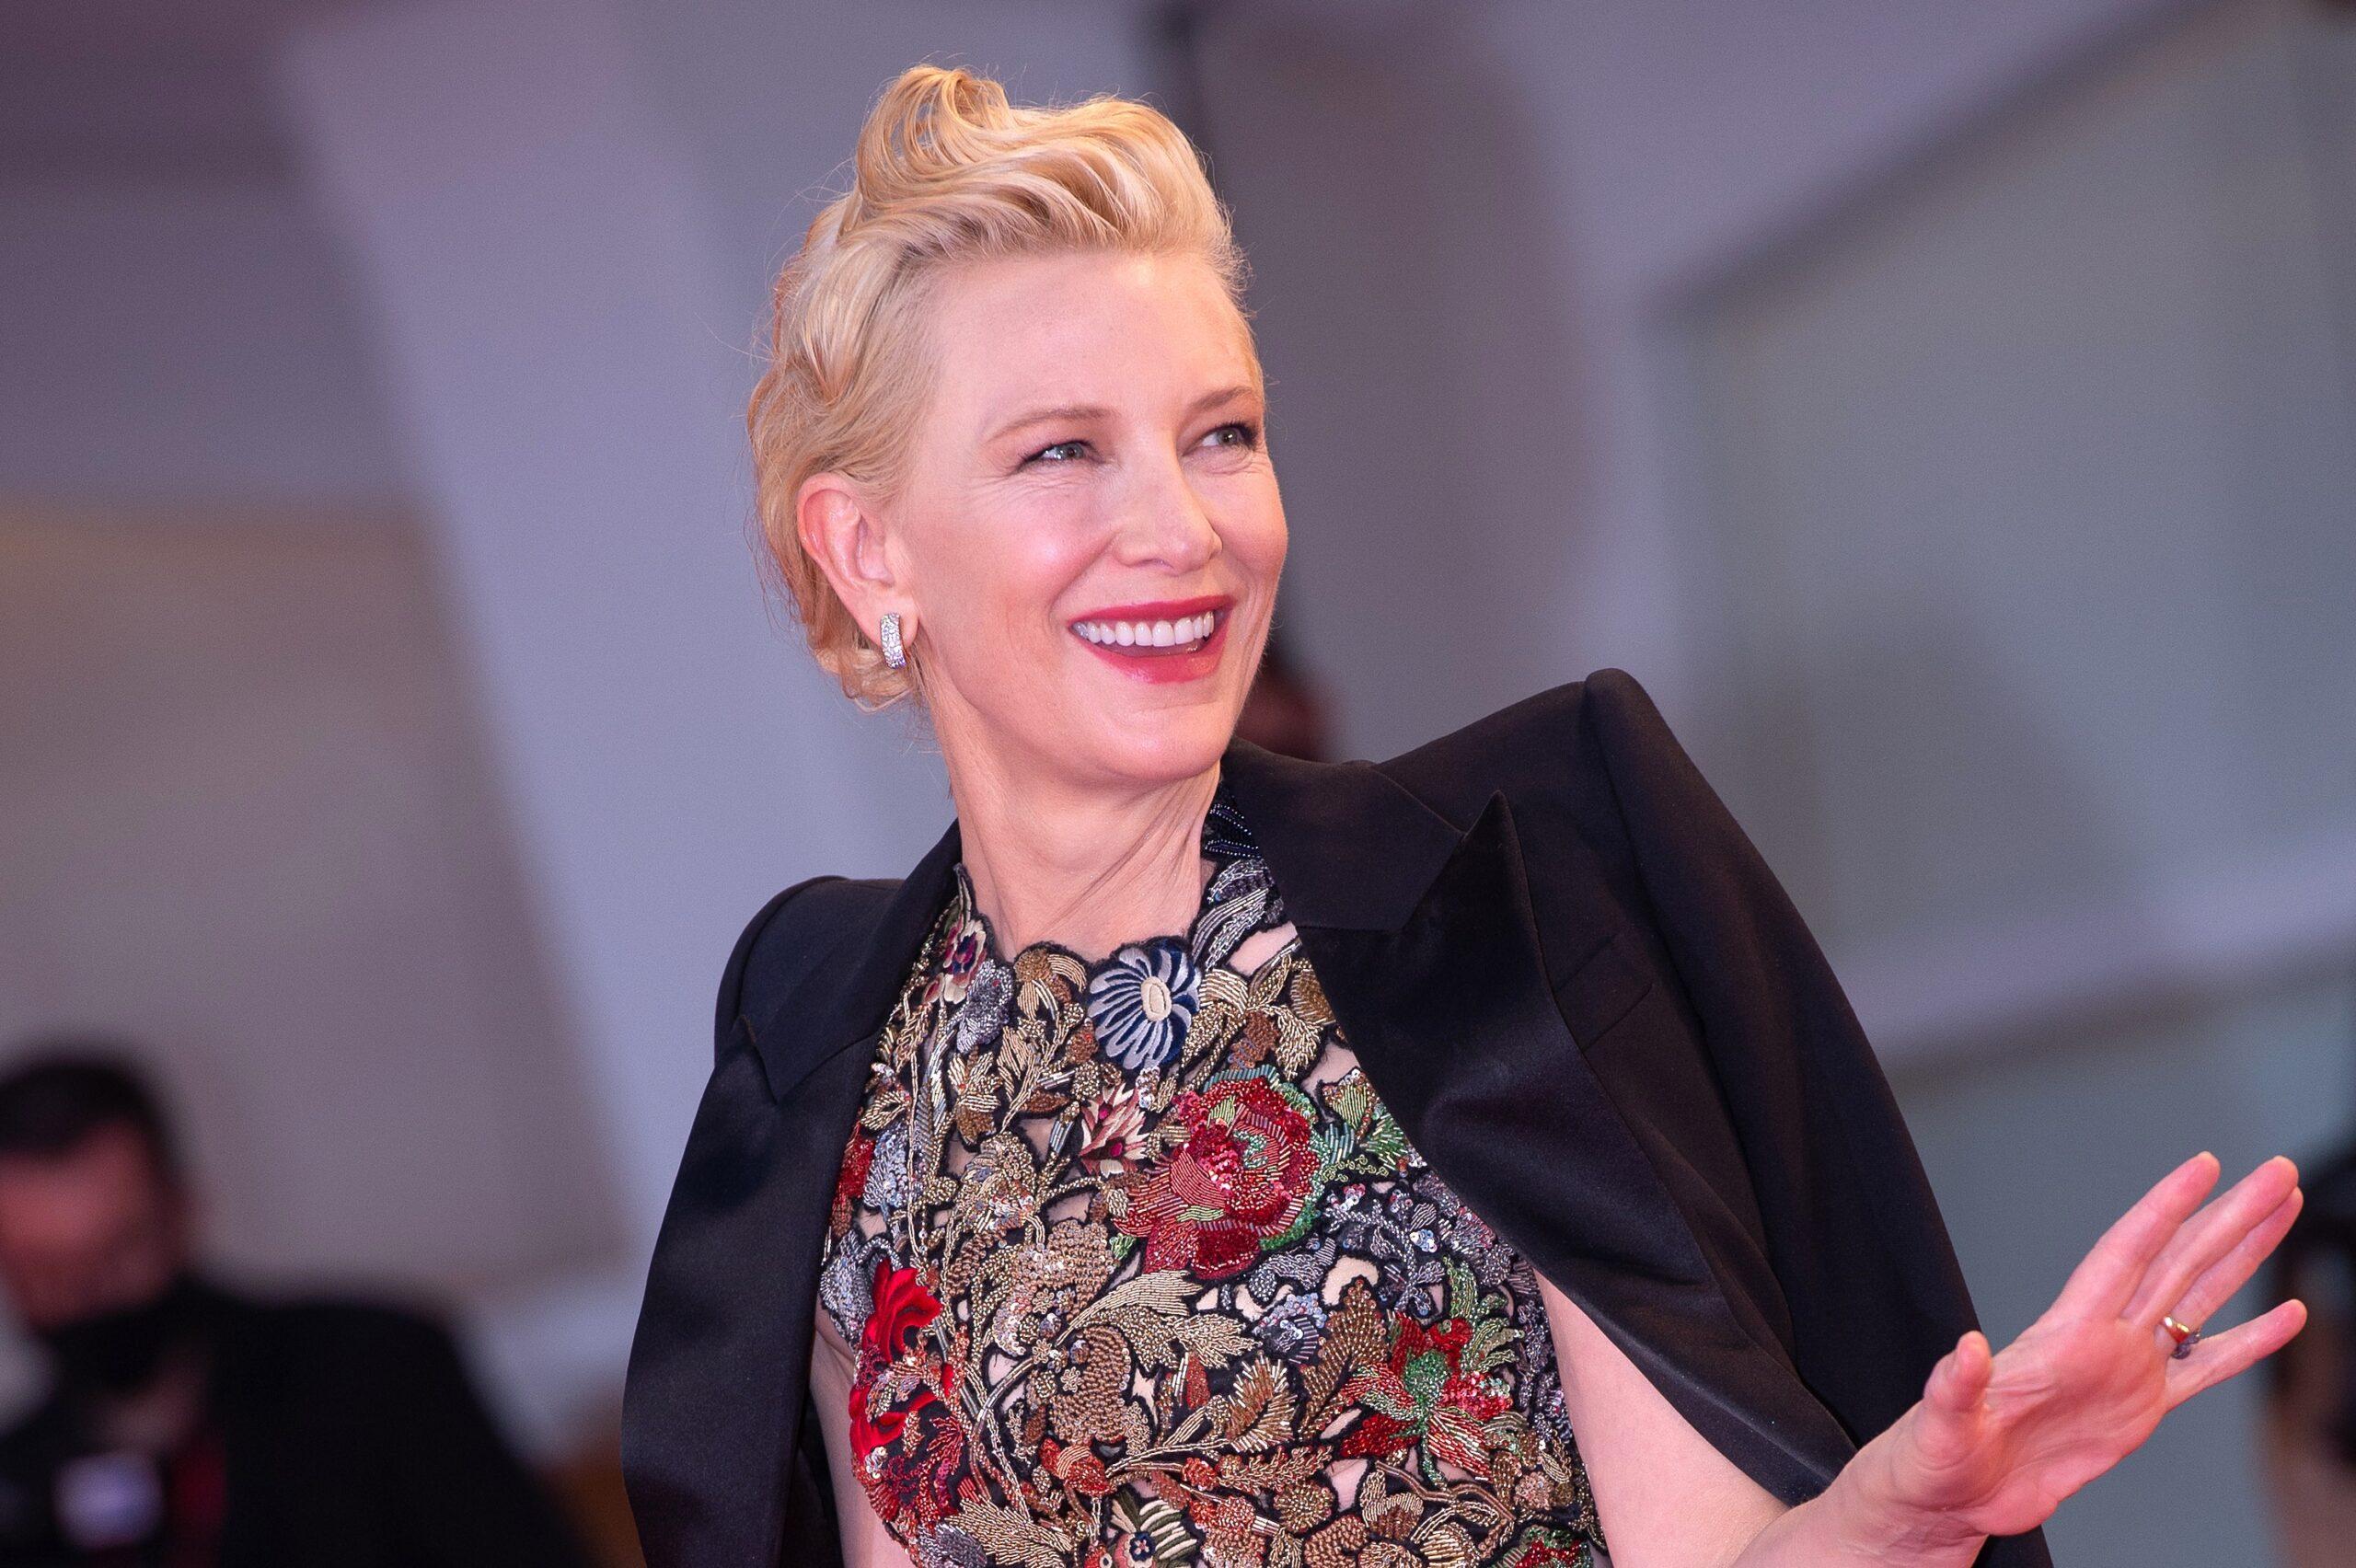 Lovers premiere 77th Venice International Film Festival - Cate Blanchett 